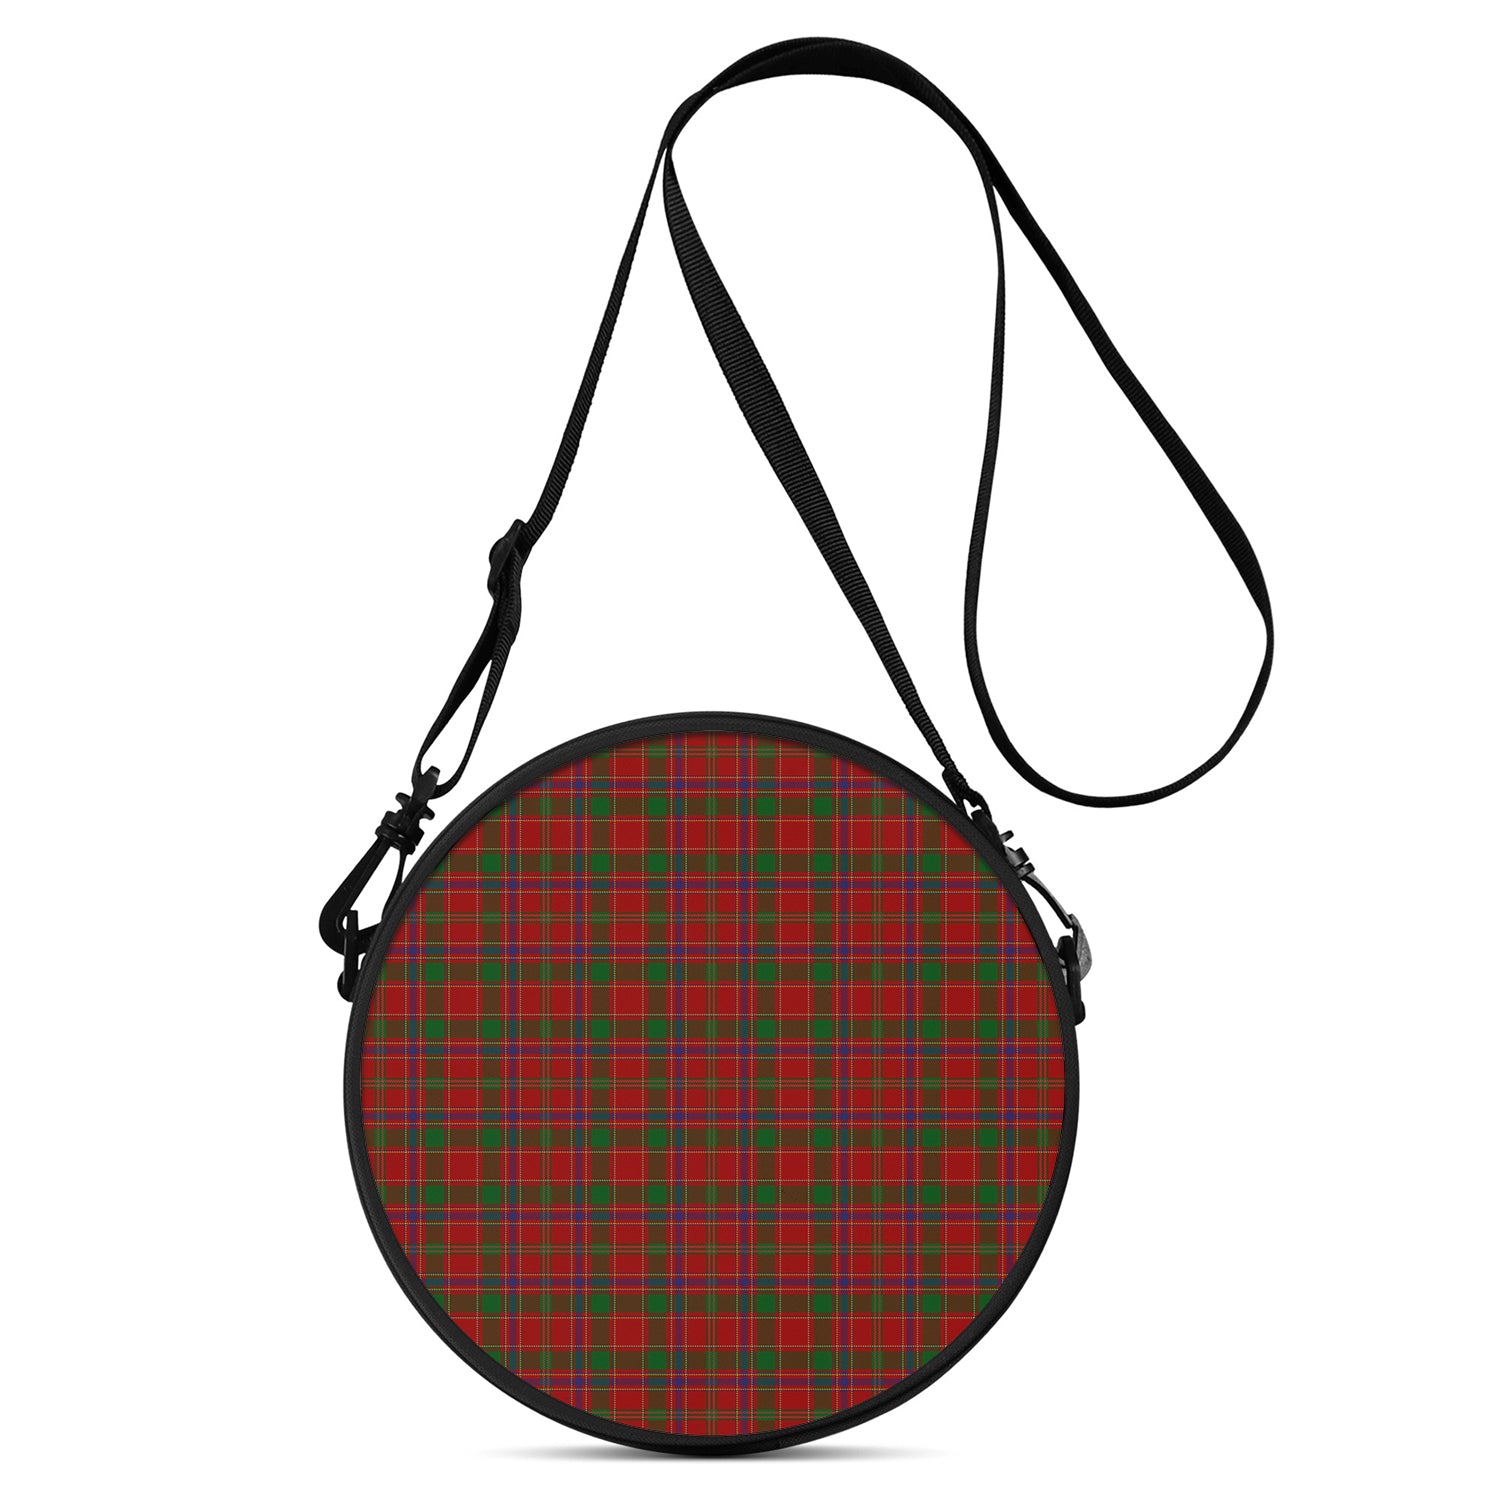 munro-tartan-round-satchel-bags